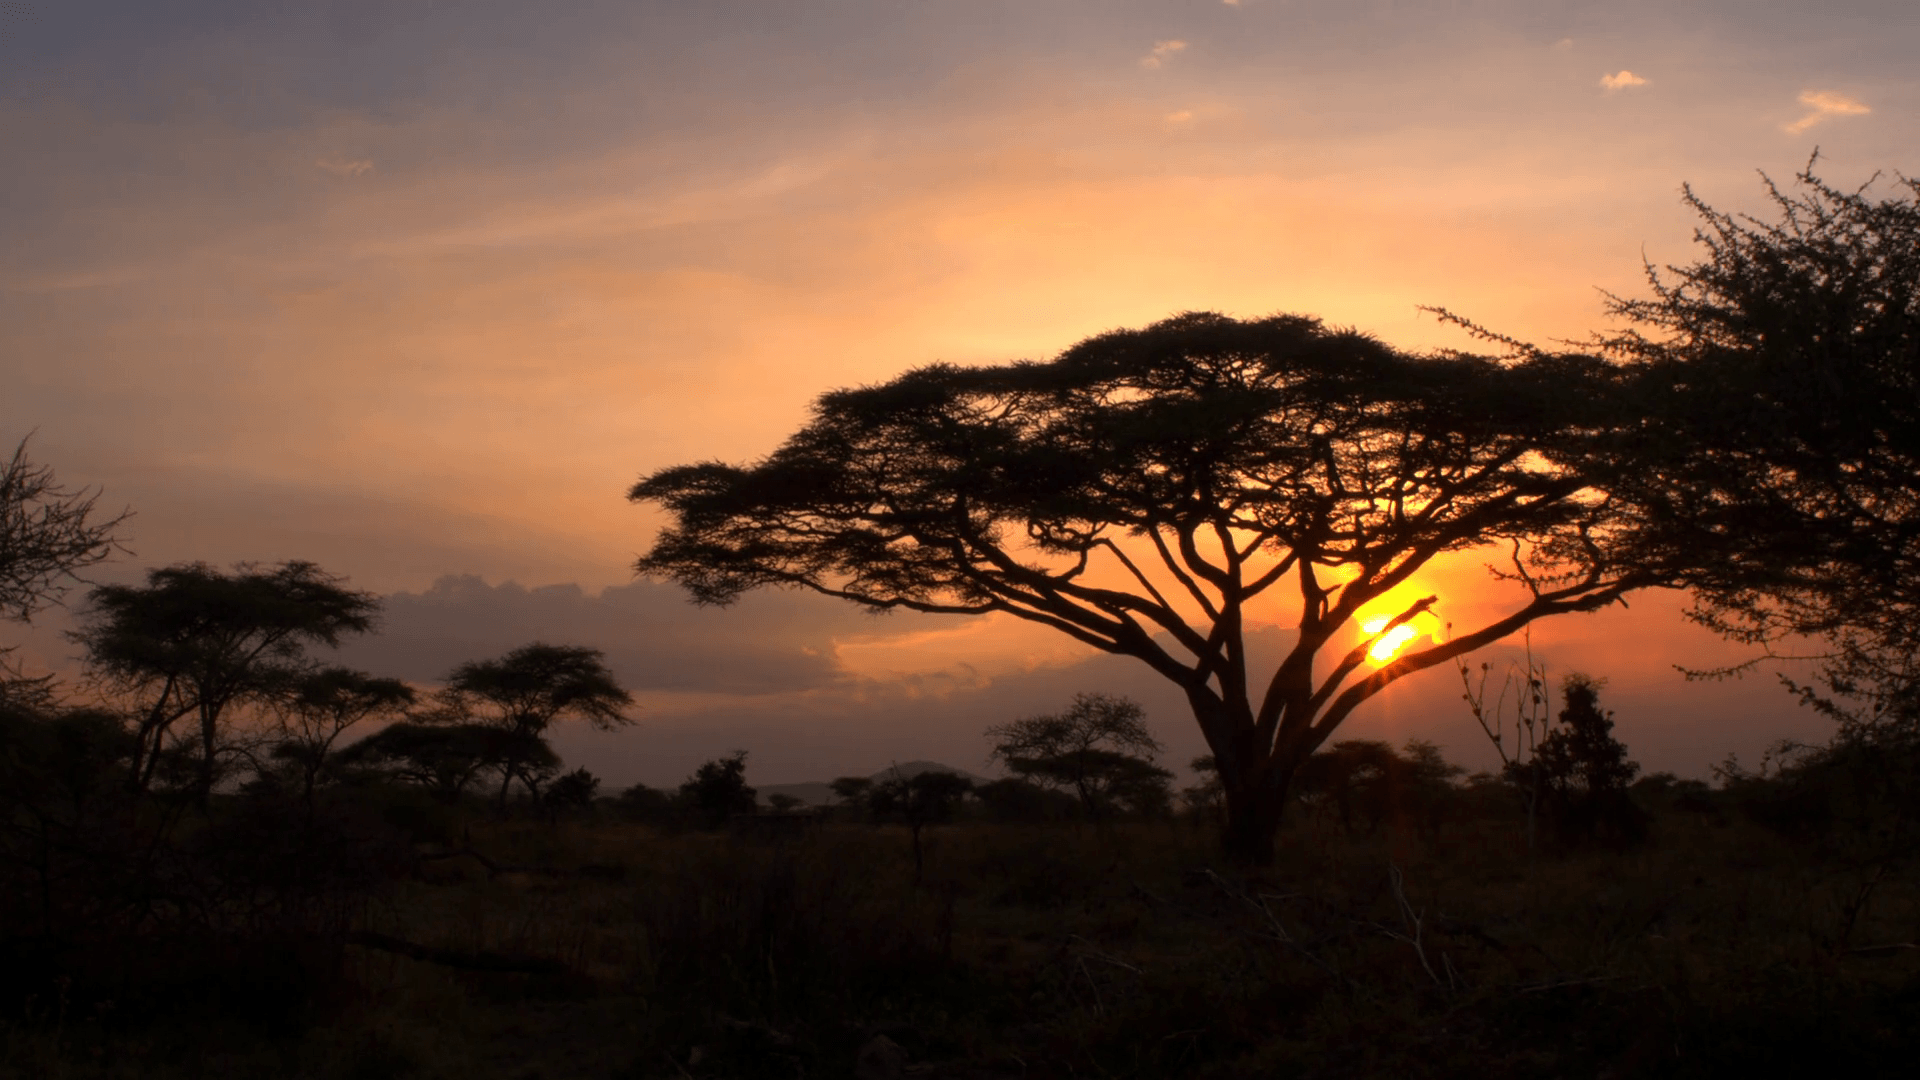 Breathtaking Serengeti National Park woodland at dreamy golden